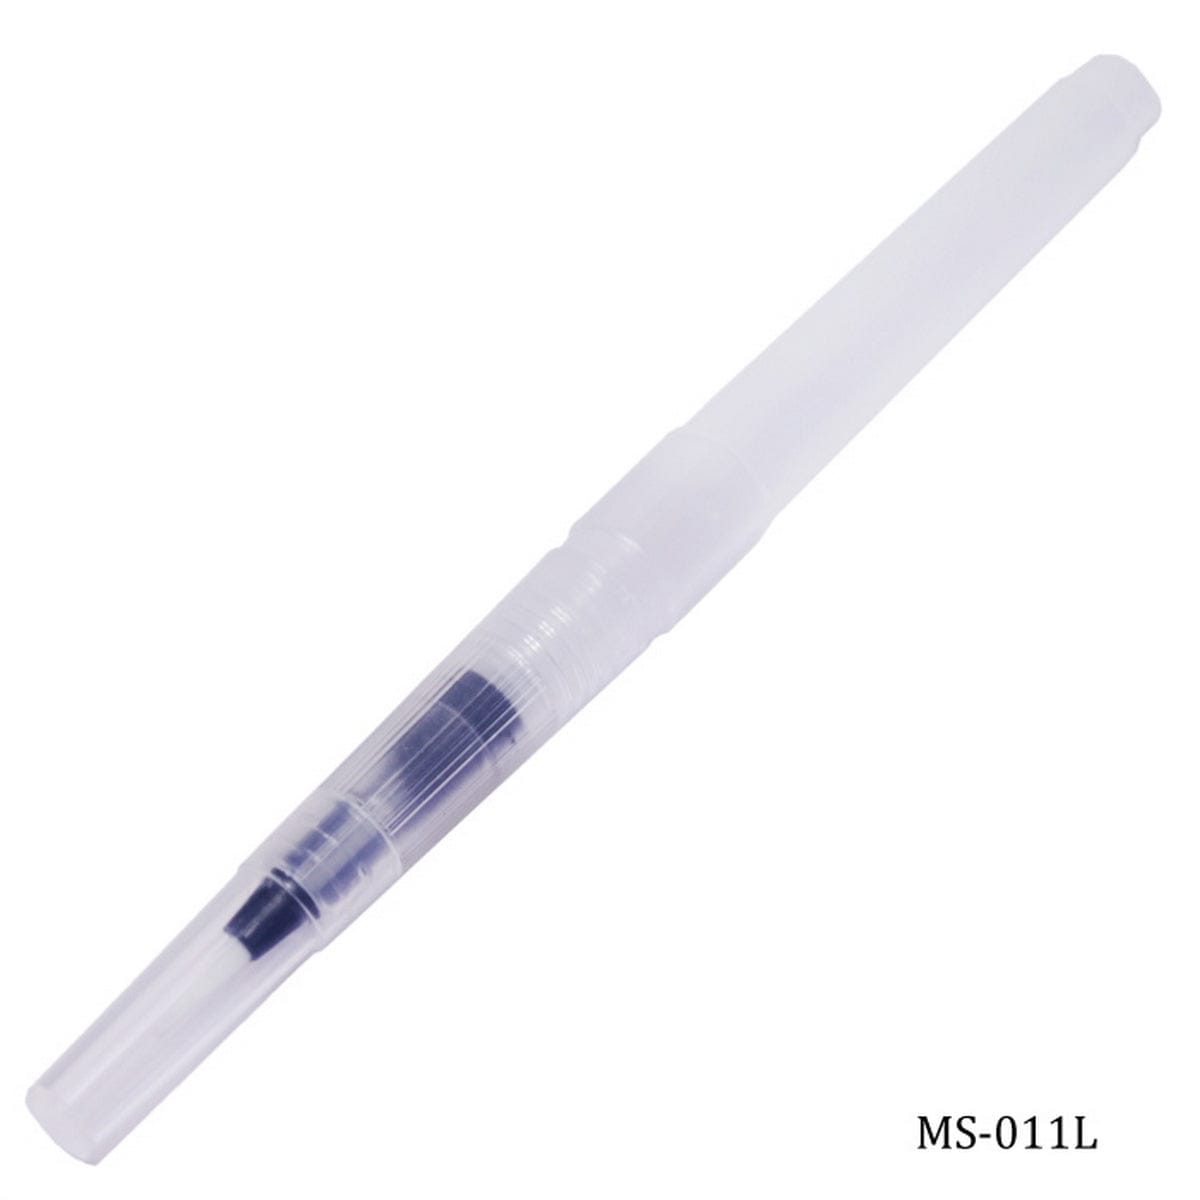 jags-mumbai Pen Refillable brush pens (Contain 1 Unit Brush pens)- Reusable Bumper Offer